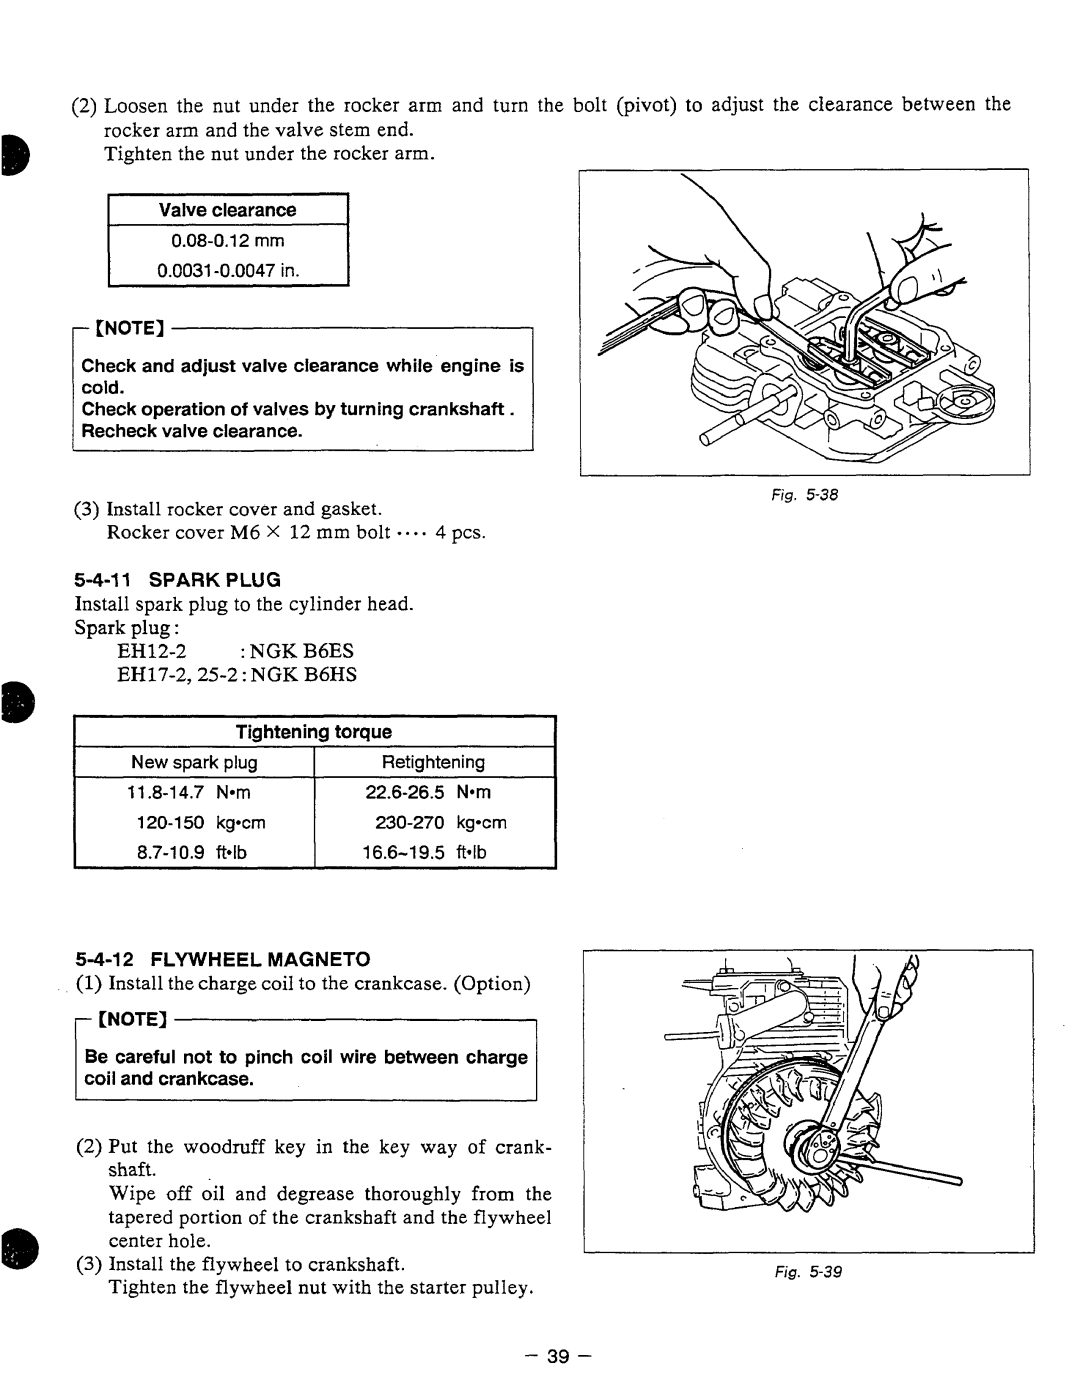 Subaru Robin Power Products EH12-2, EH17-2, EH25-2 manual Spark plug, EH17-2,25-2NGK B6HS 